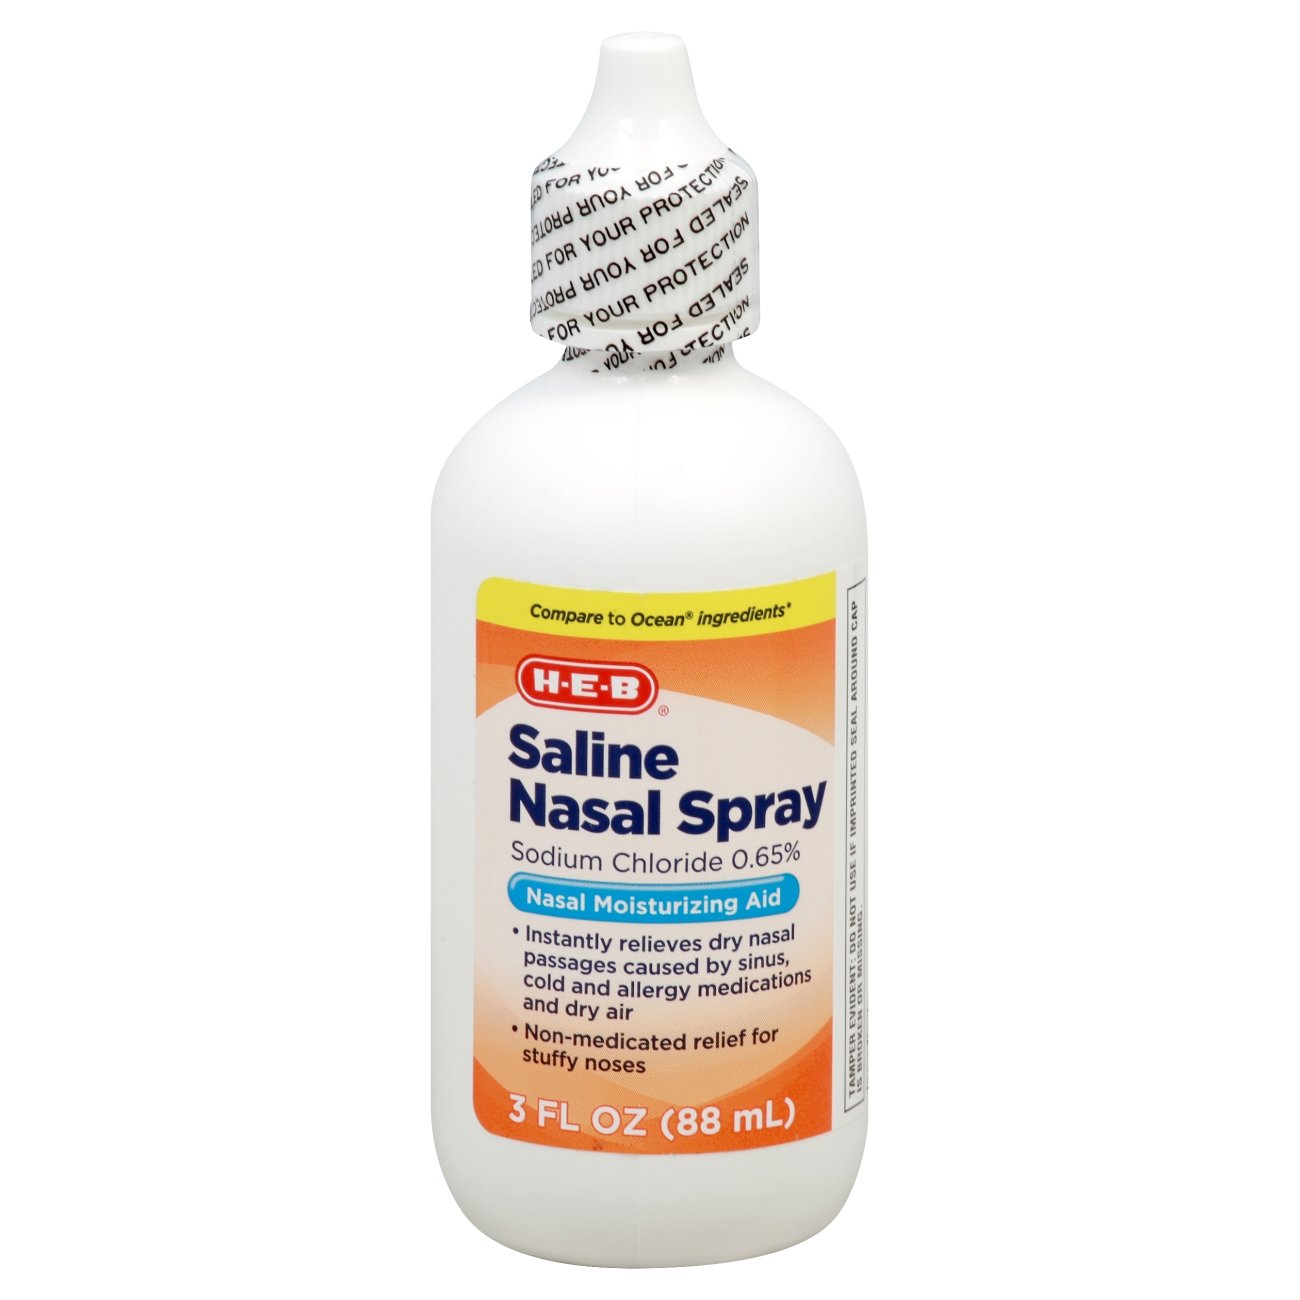 what's in saline nasal spray